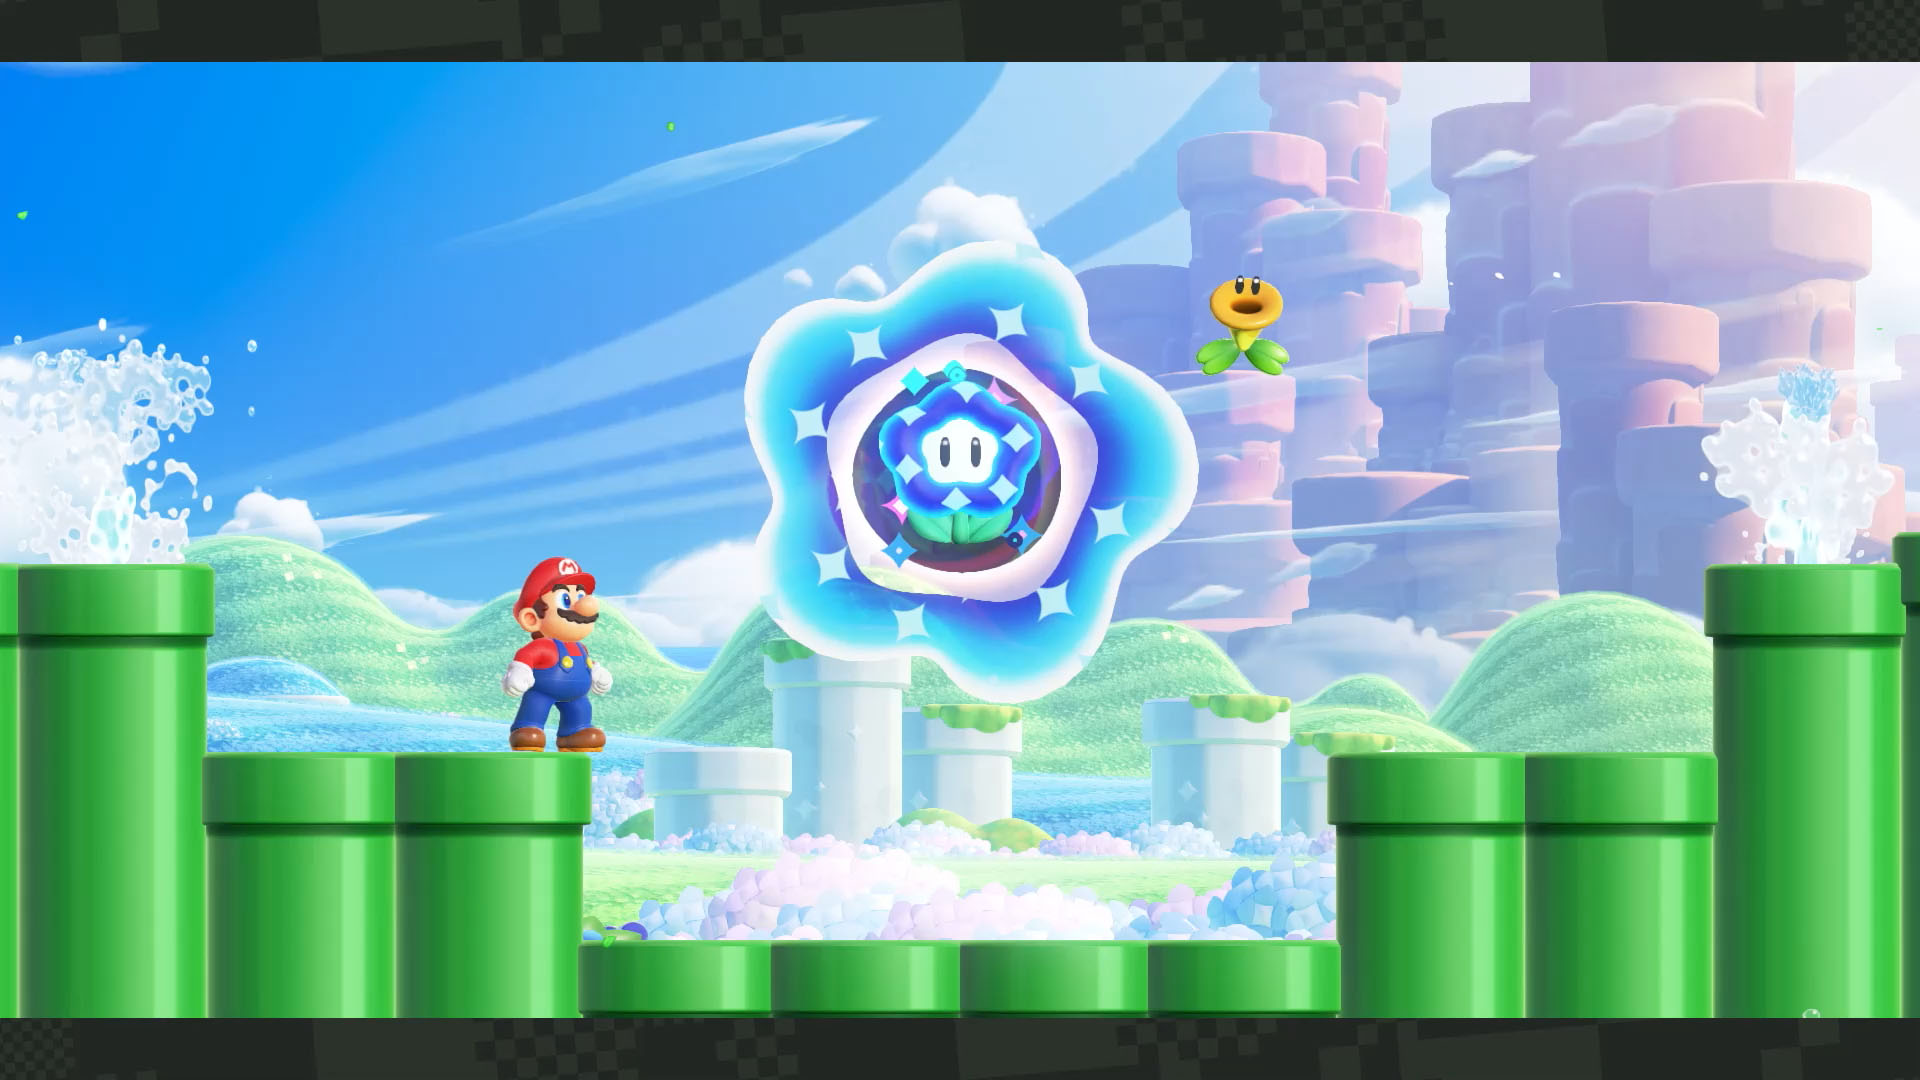 Super Mario Bros. Wonder, MarioWiki